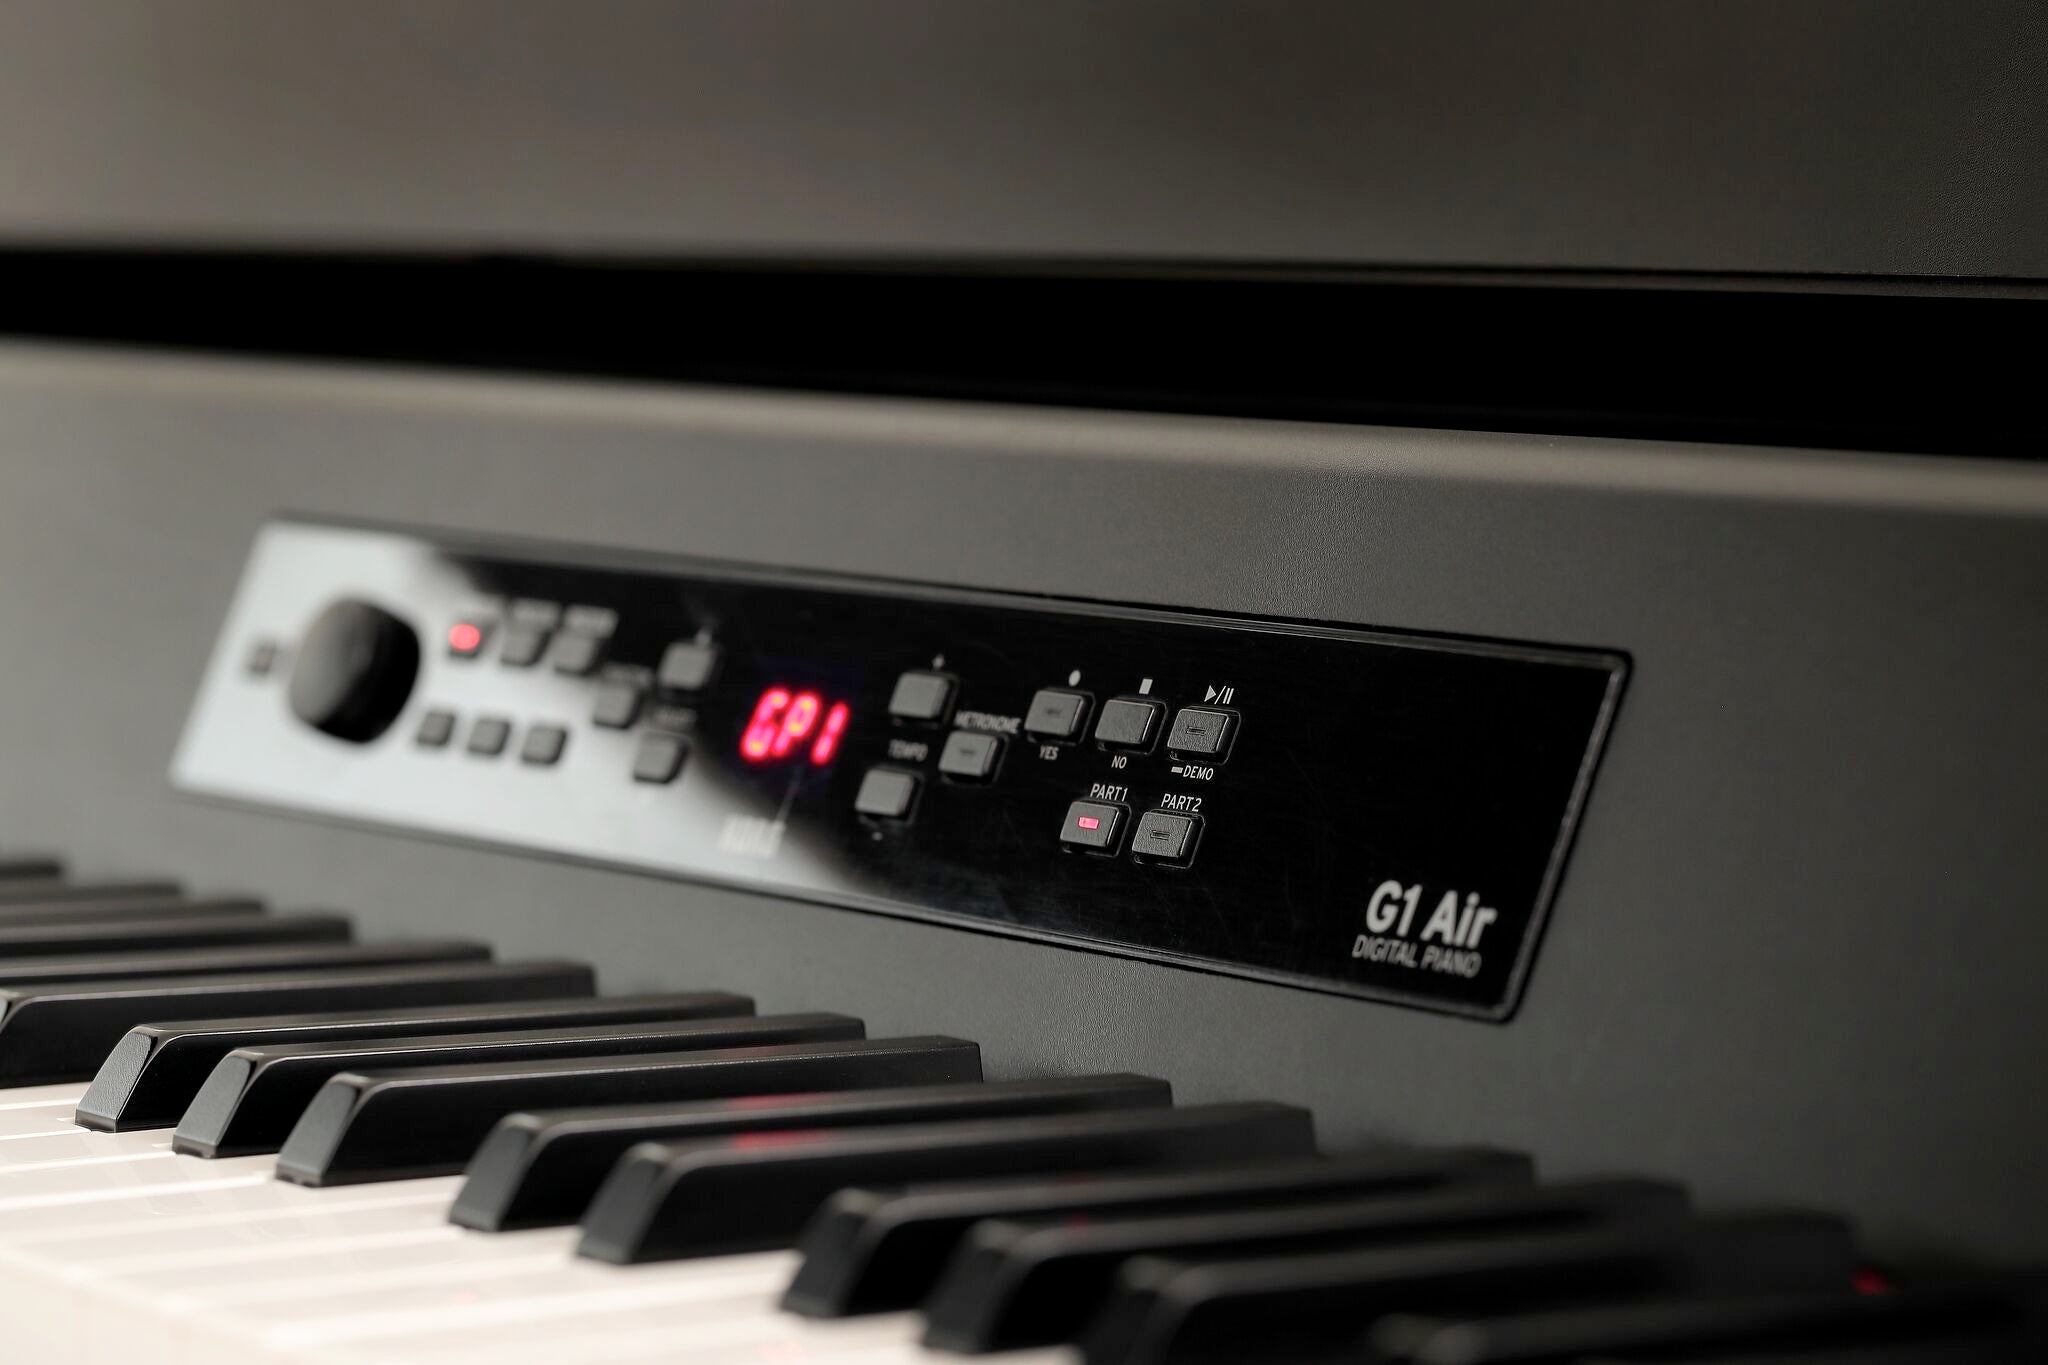 G1B Air Digital Piano - Black KORG USA Official Store